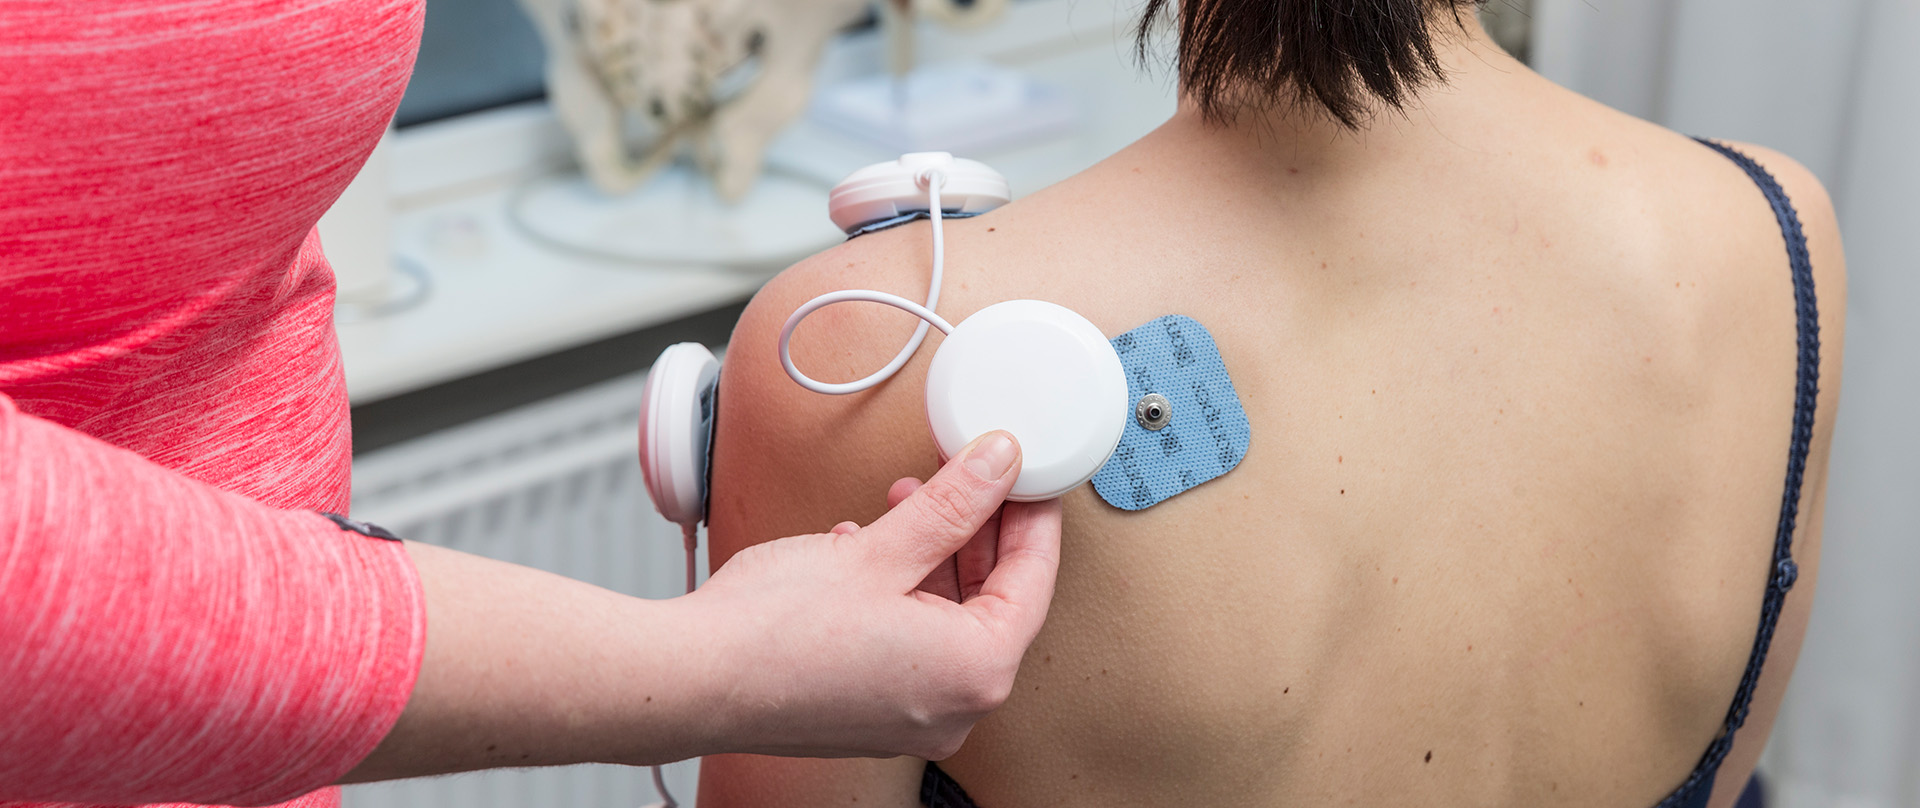 Fysioterapeut fra Fysioterapeuterne Esbjerg behandler klient ryg med Nmes - Neuromuskulær Elektrisk Stimulation mens klienten sidder op